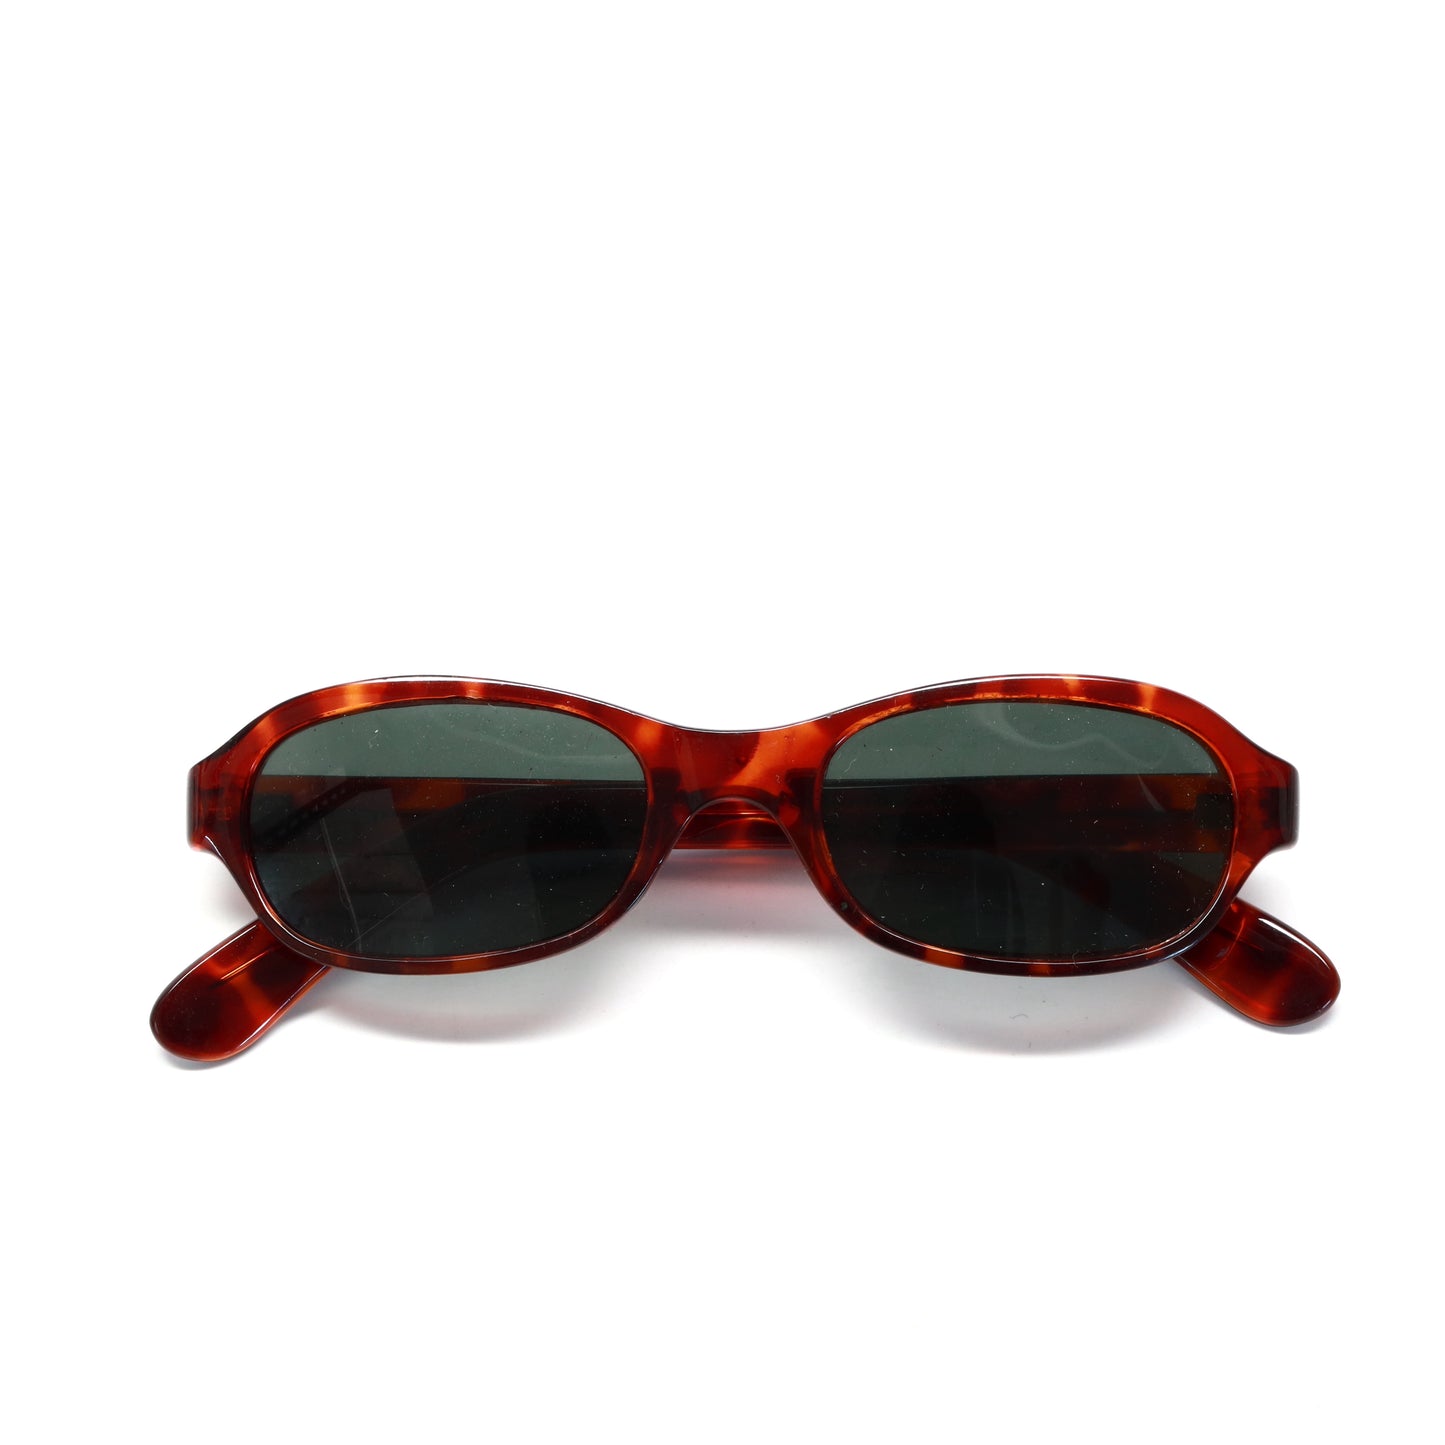 Vintage Standard Size 90s Mod Oval Frame Sunglasses - Tortoise